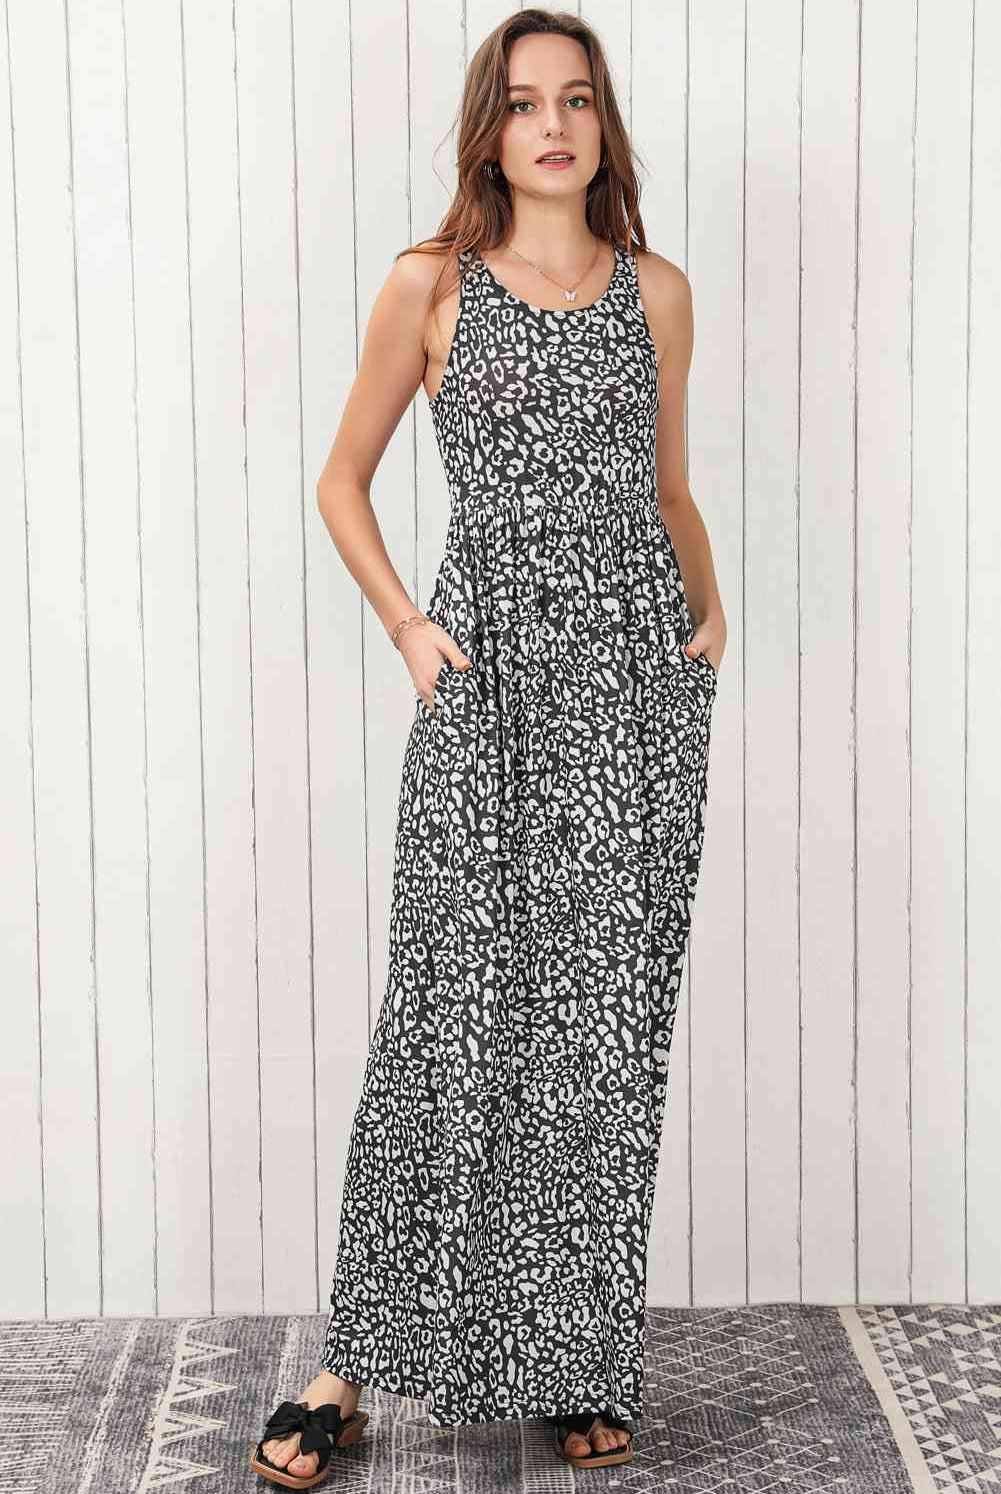 Leopard Round Neck Sleeveless Maxi Dress - GemThreads Boutique Leopard Round Neck Sleeveless Maxi Dress